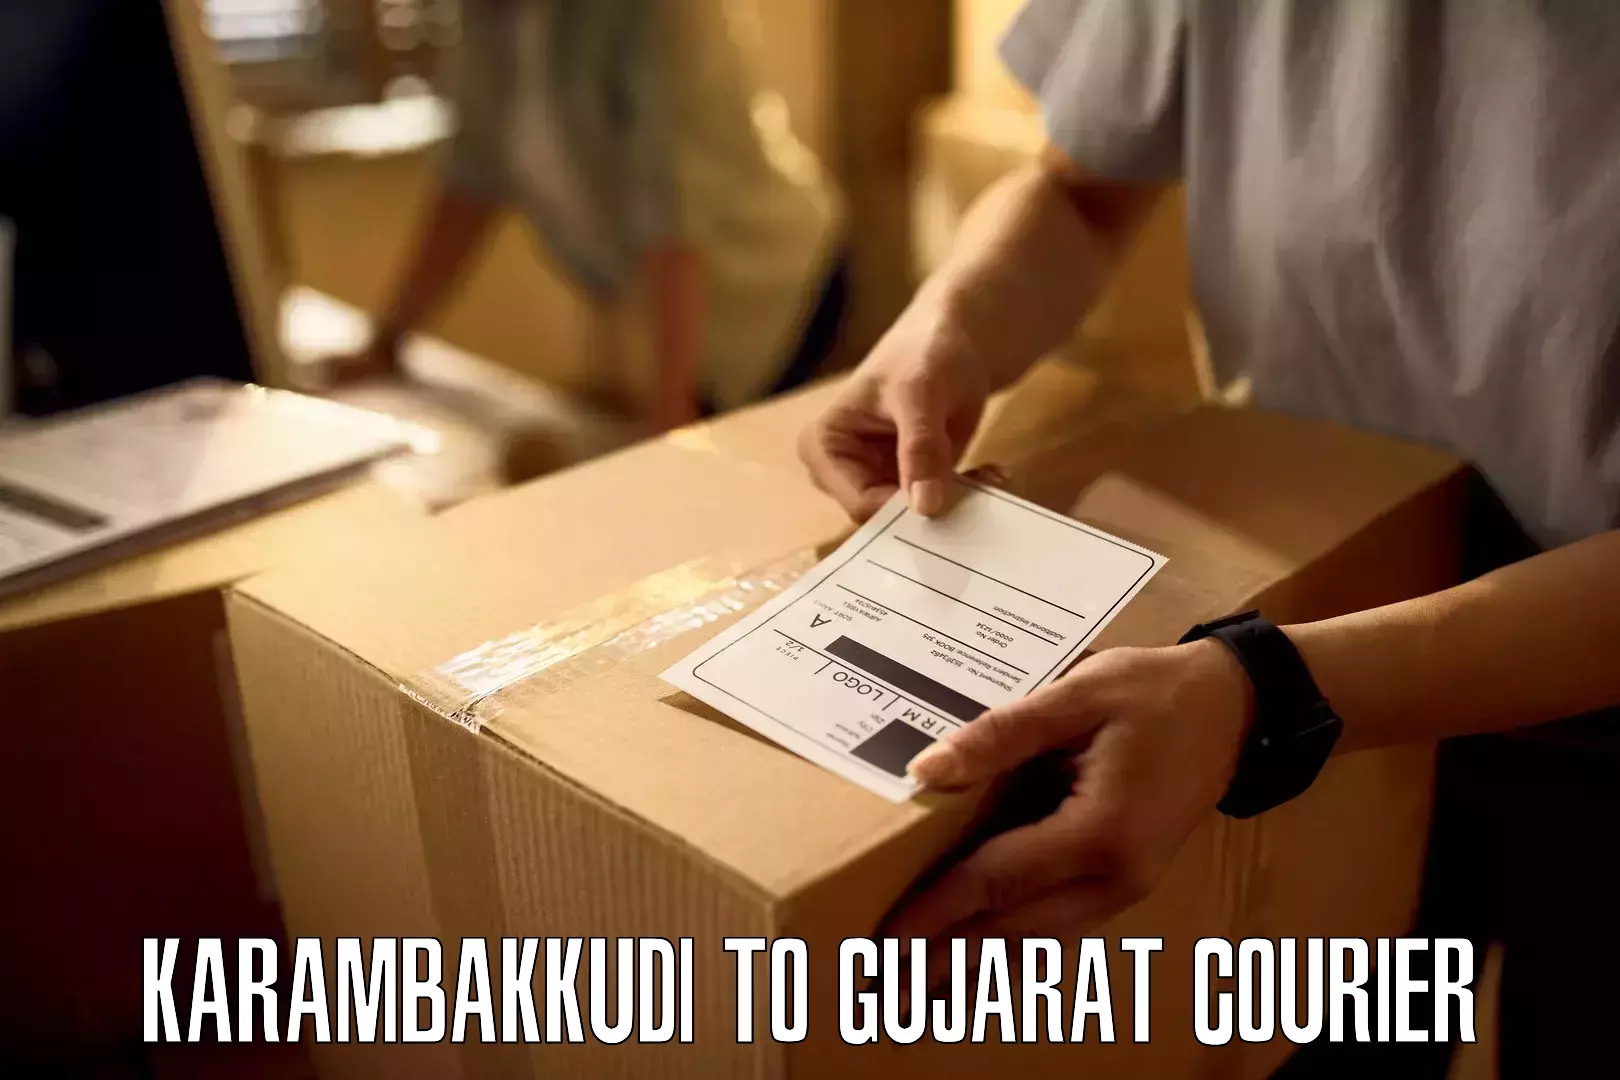 Specialized shipment handling in Karambakkudi to Ahmedabad